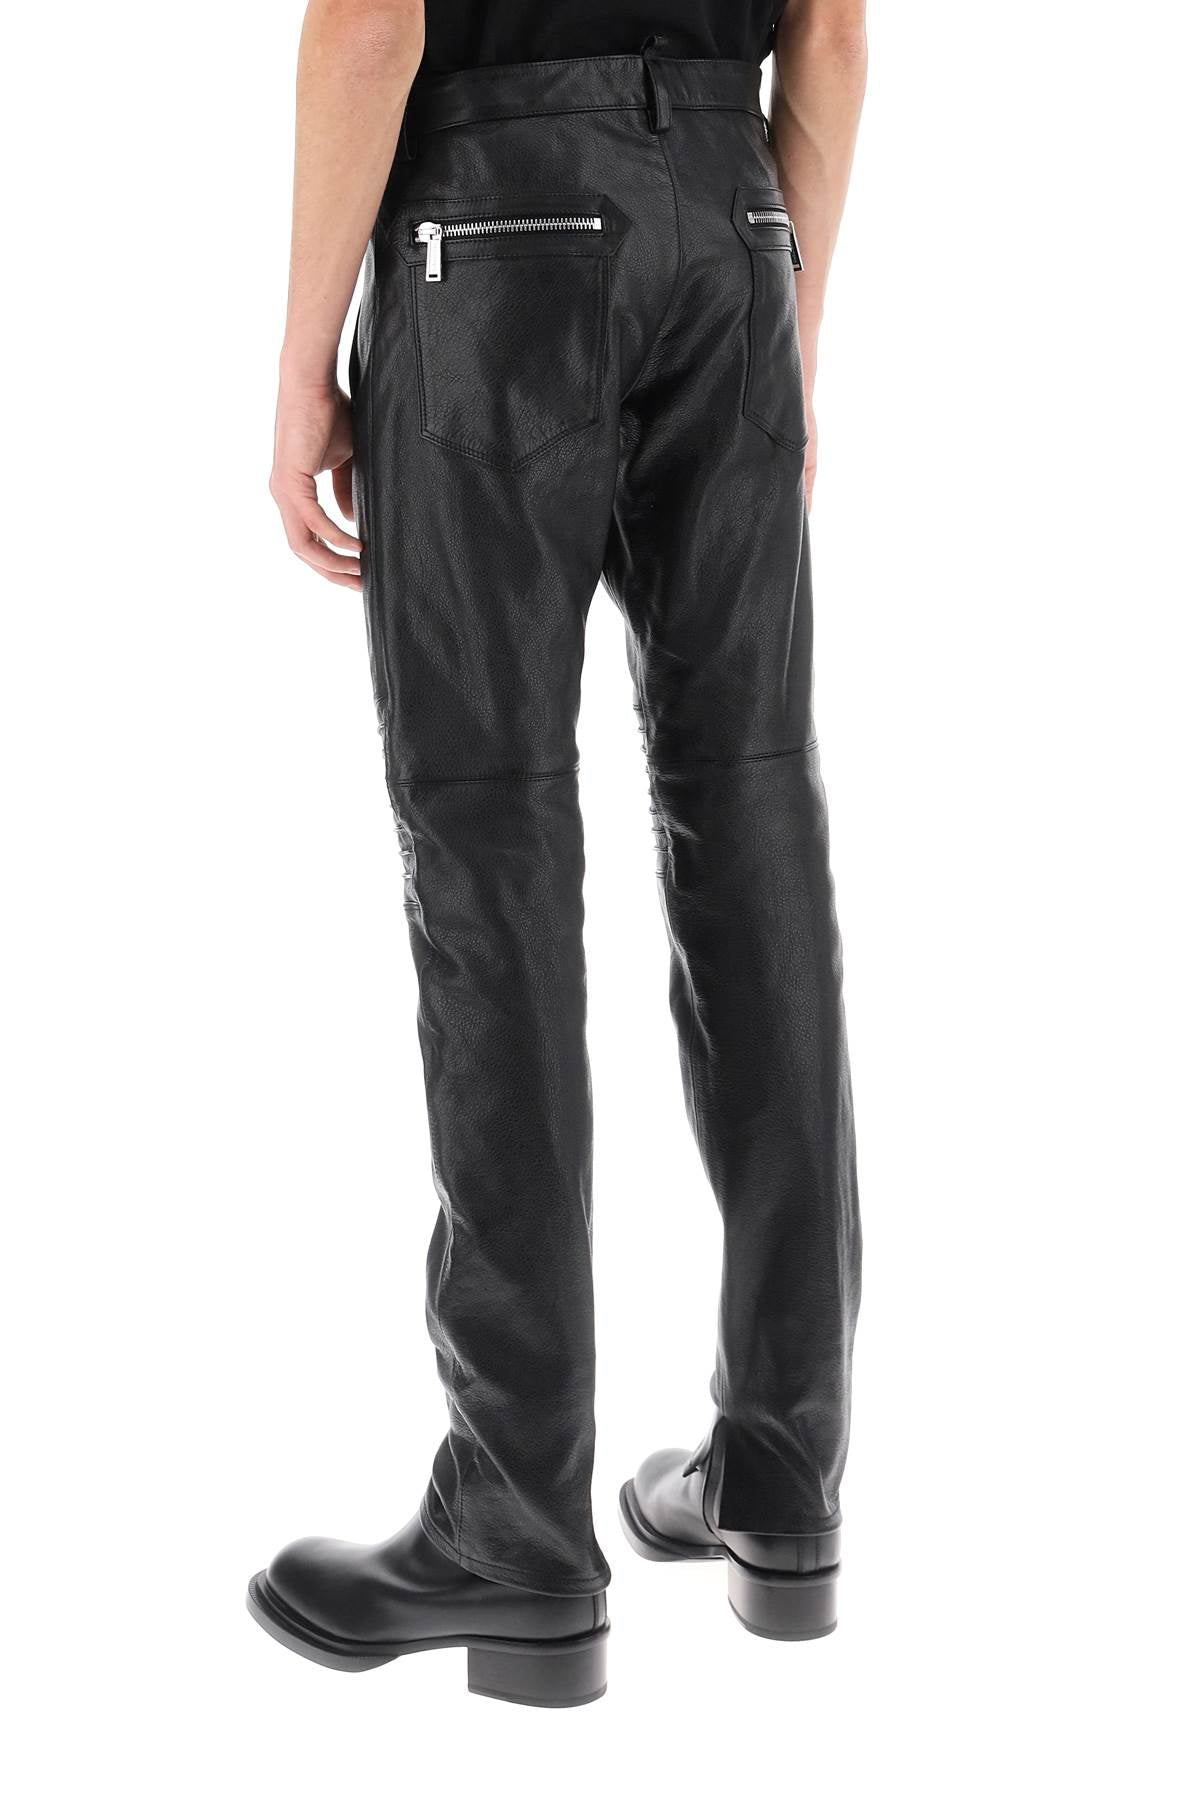 DSQUARED2 Biker-Inspired Black Leather Pants for Men